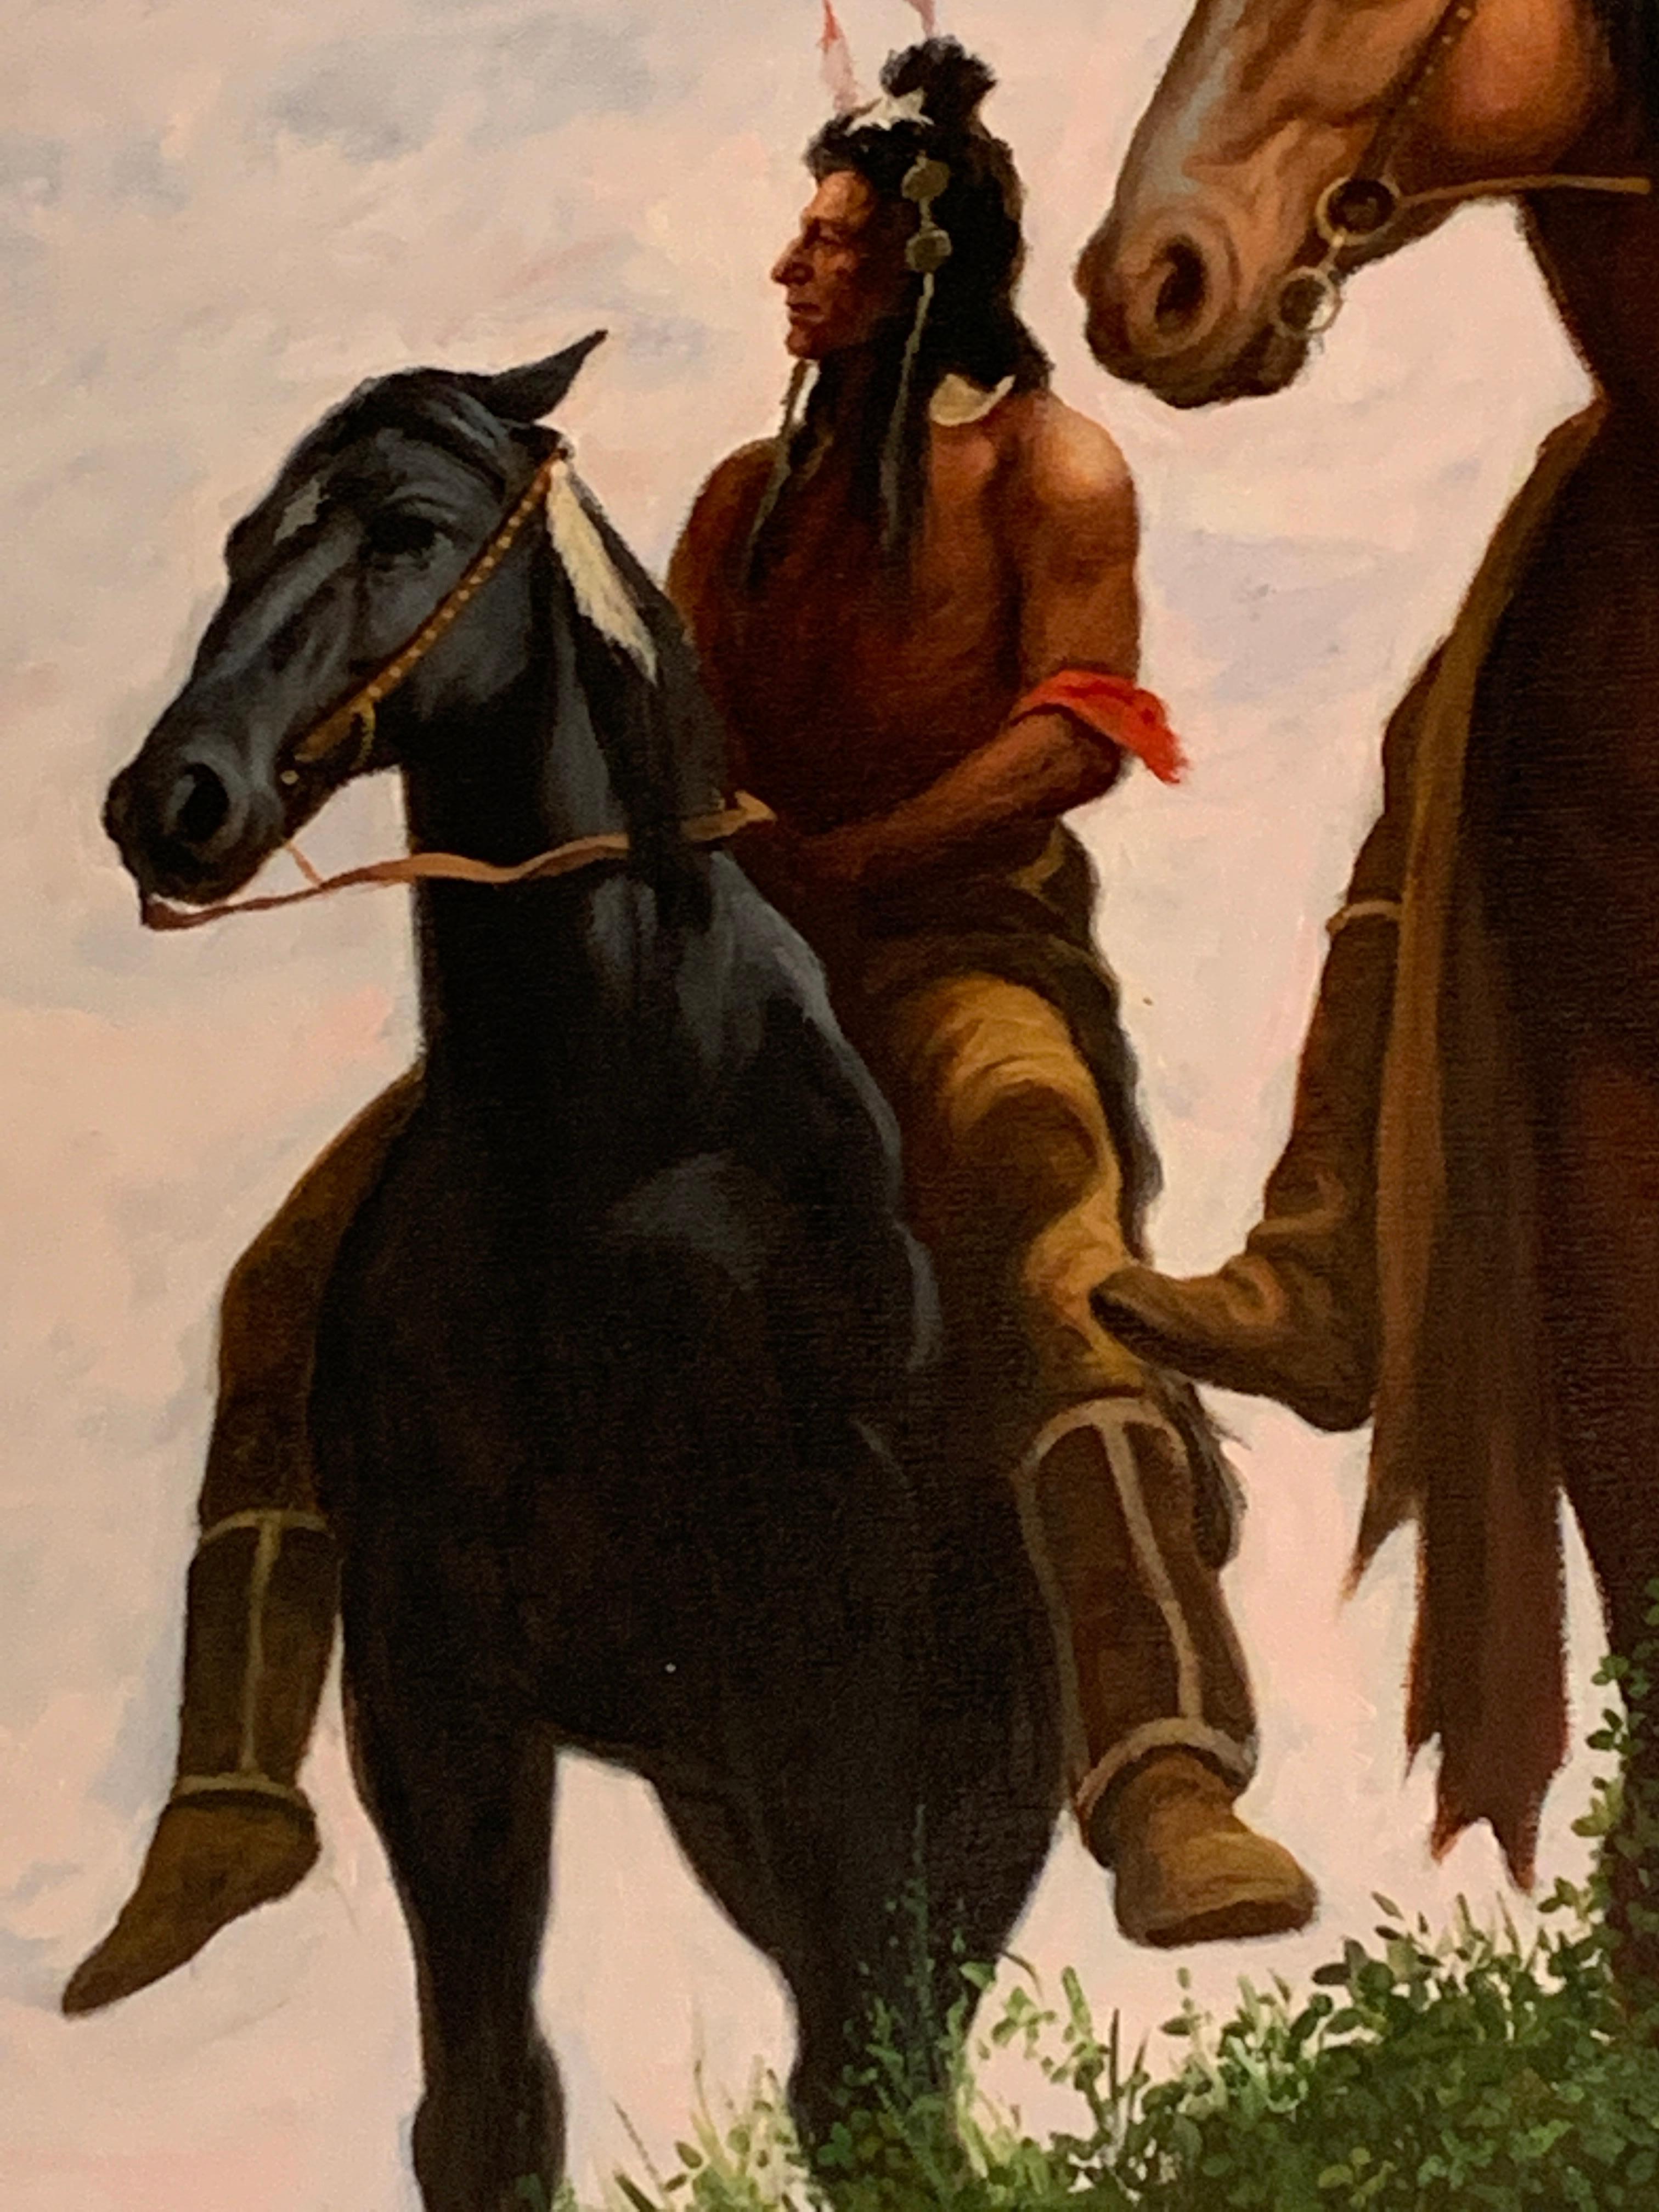 „Apsaalooke Warriors“, John Berry, Indigene Kunst (Nord-/Südamerika), Öl/Leinwand, 40x30 Zoll im Angebot 3